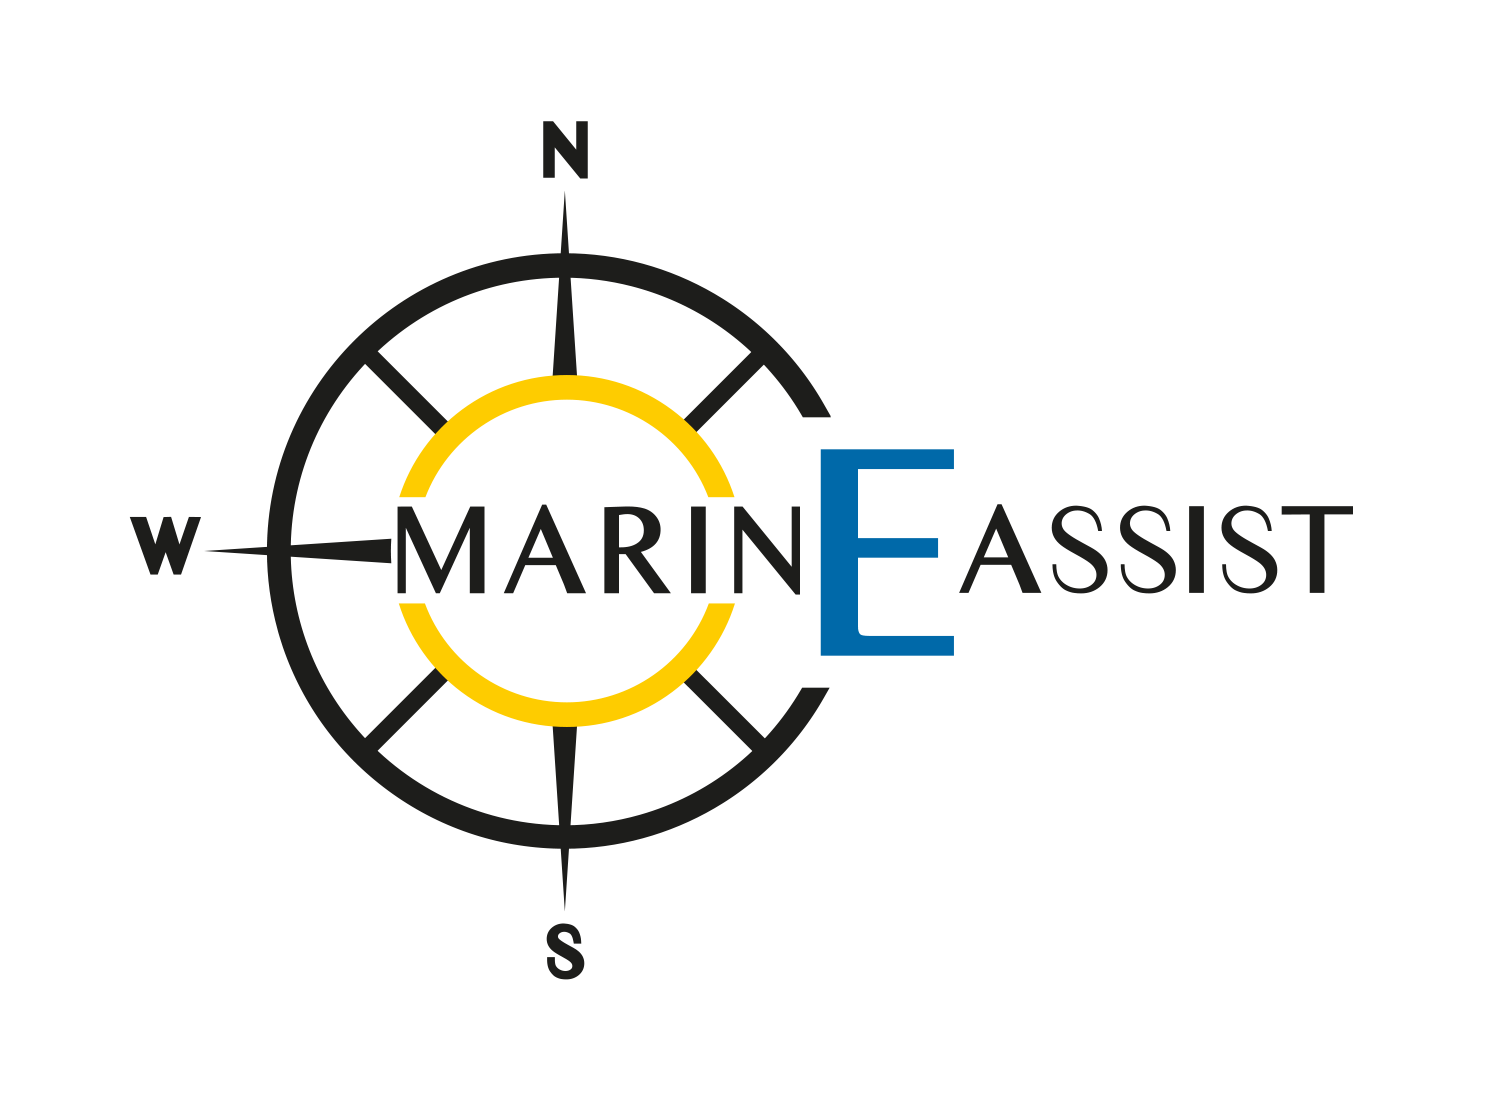 MarinEassist logotype